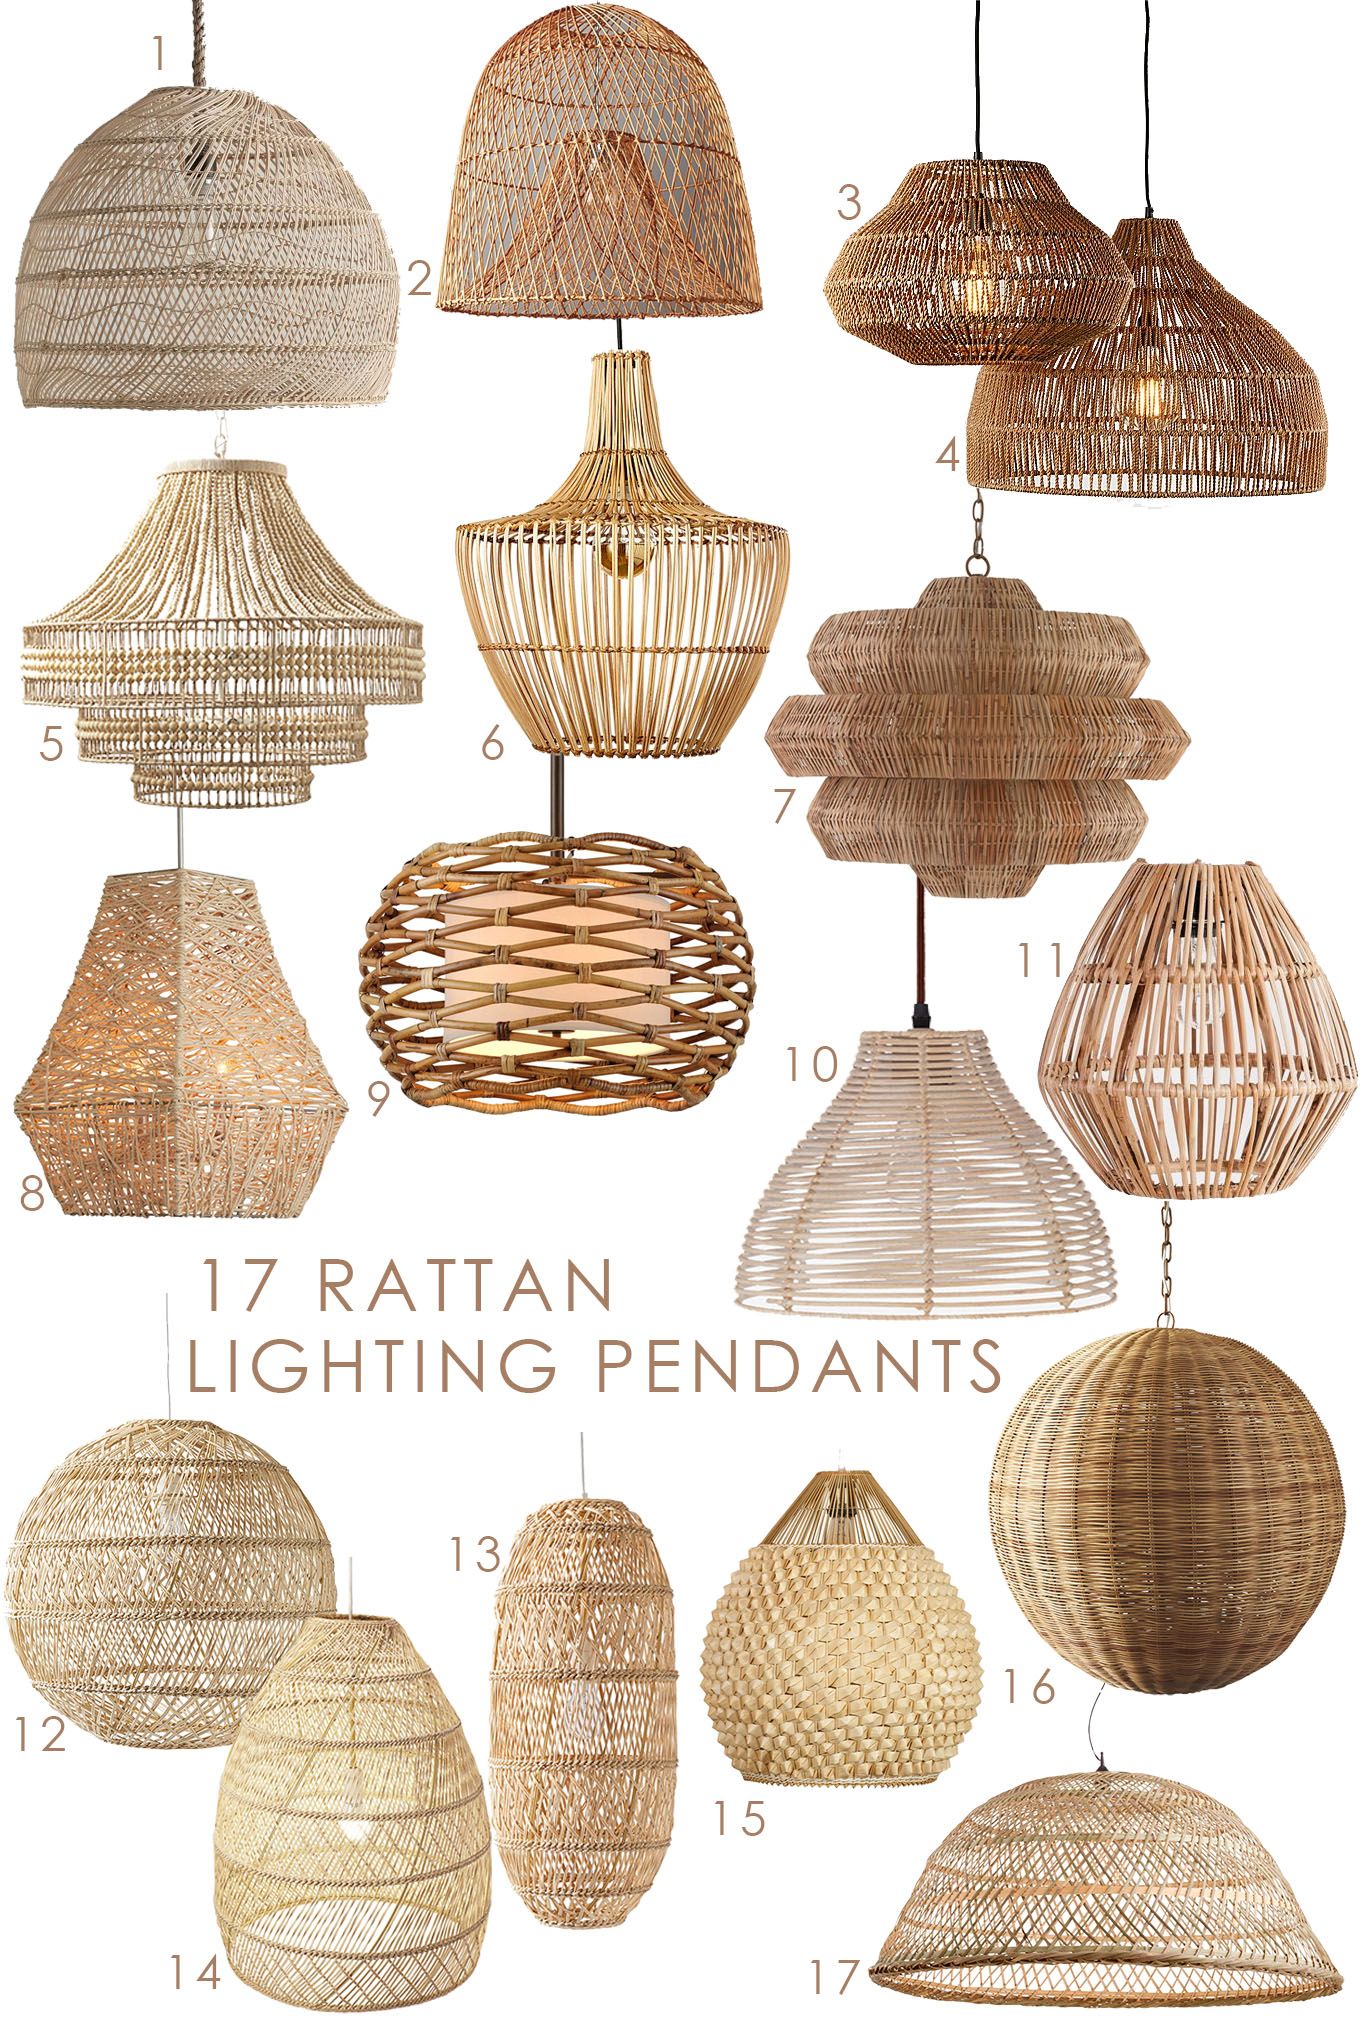 17 Rattan Lighting Pendants